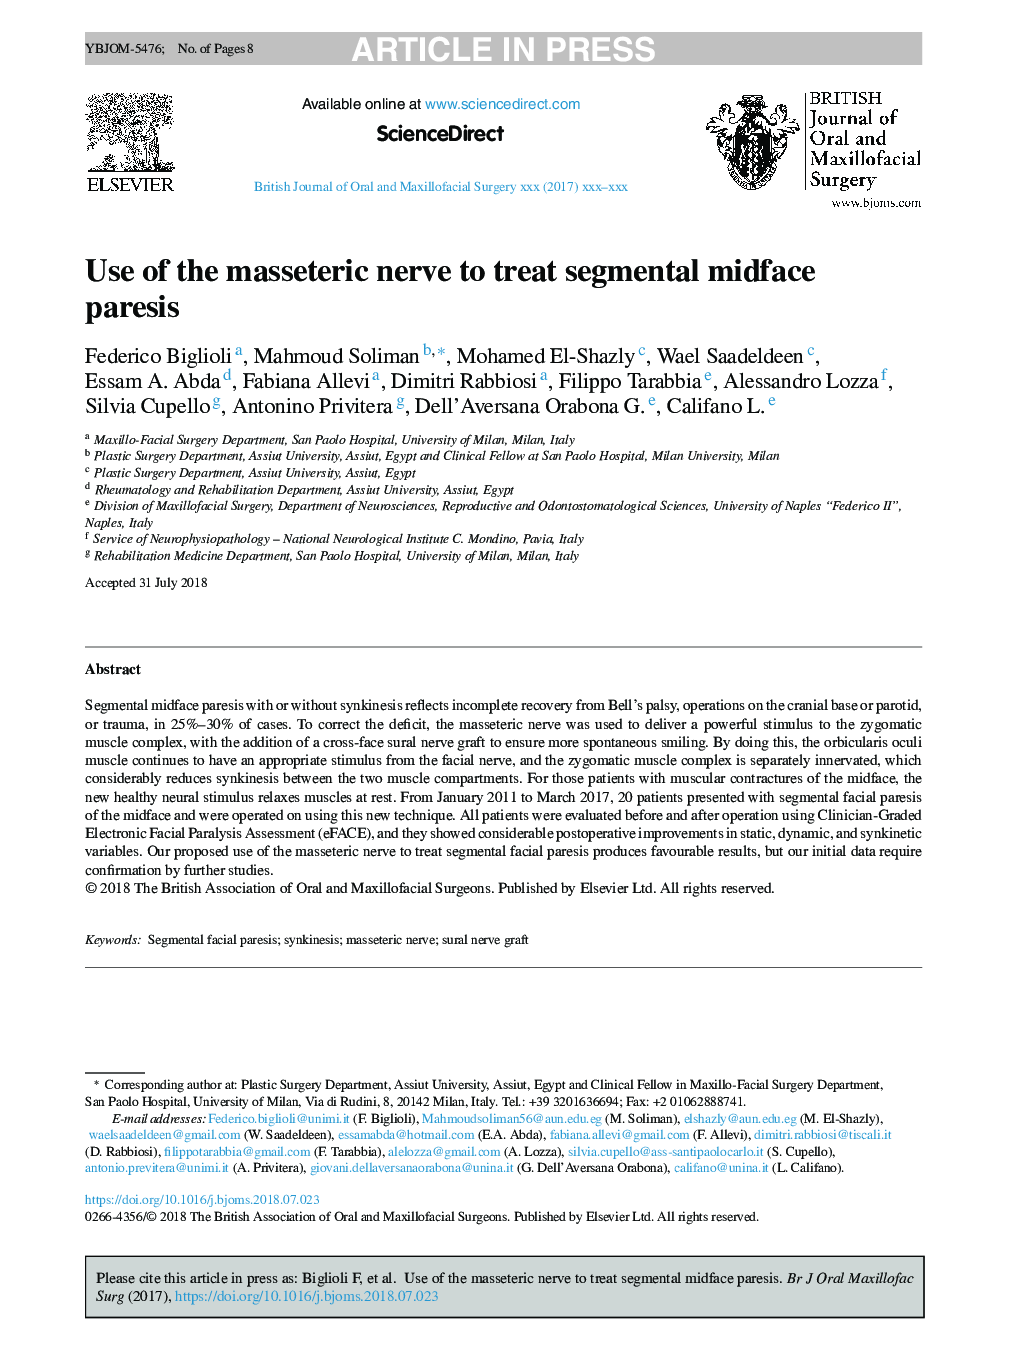 Use of the masseteric nerve to treat segmental midface paresis